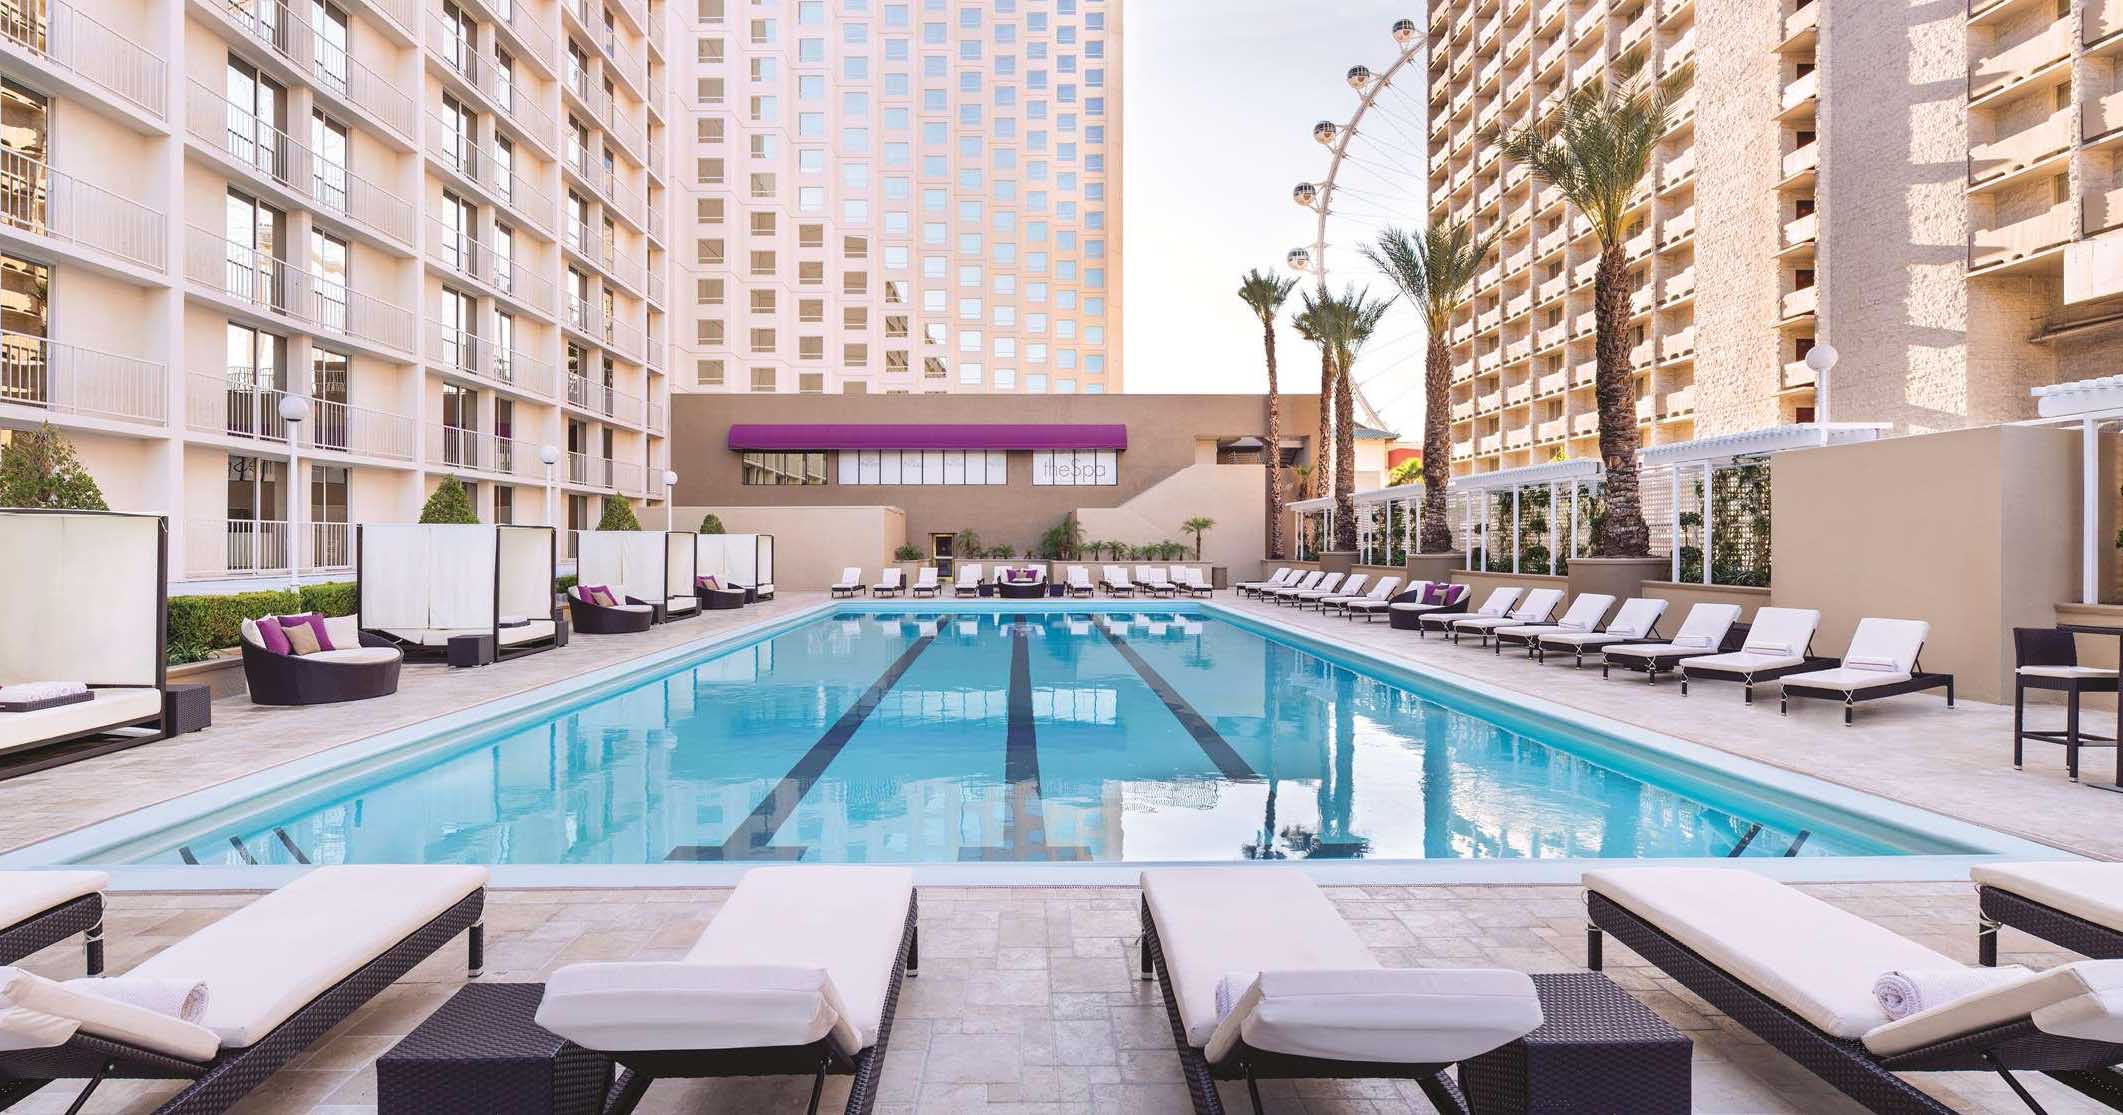 Harrah's Pool Las Vegas hotels guide